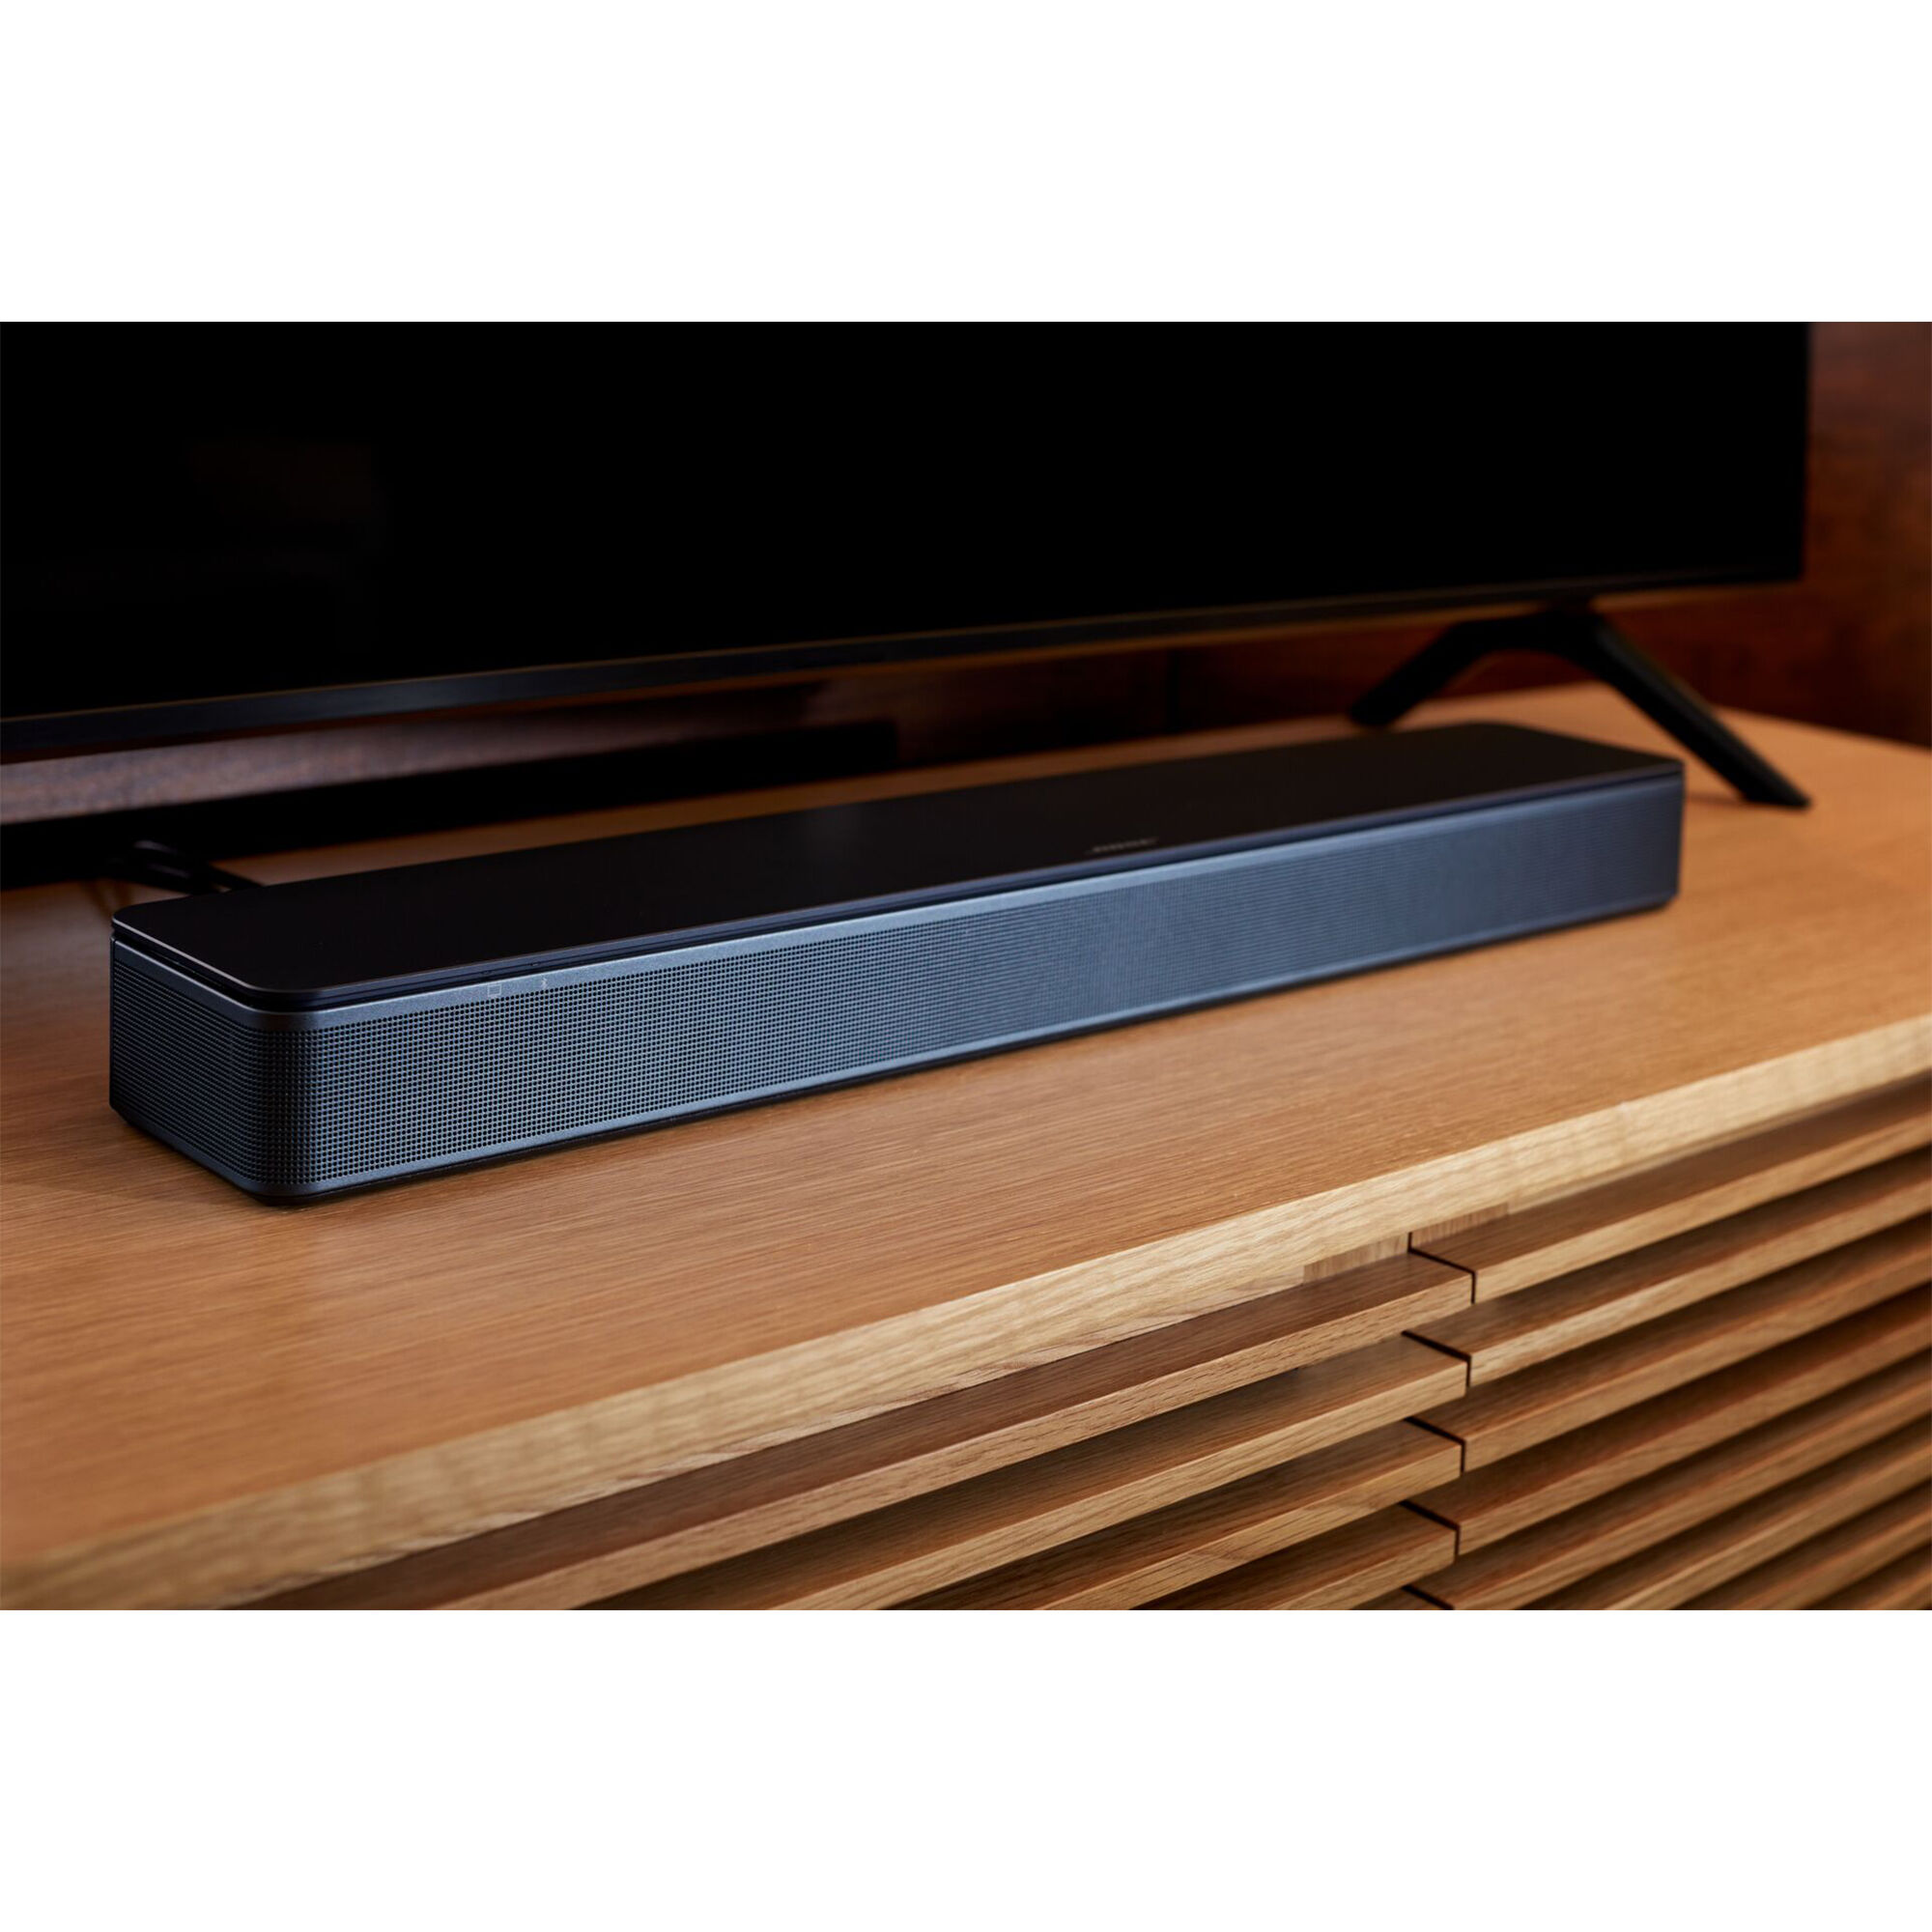 Bose - TV Speaker Bluetooth Soundbar - Black | P.C. Richard & Son